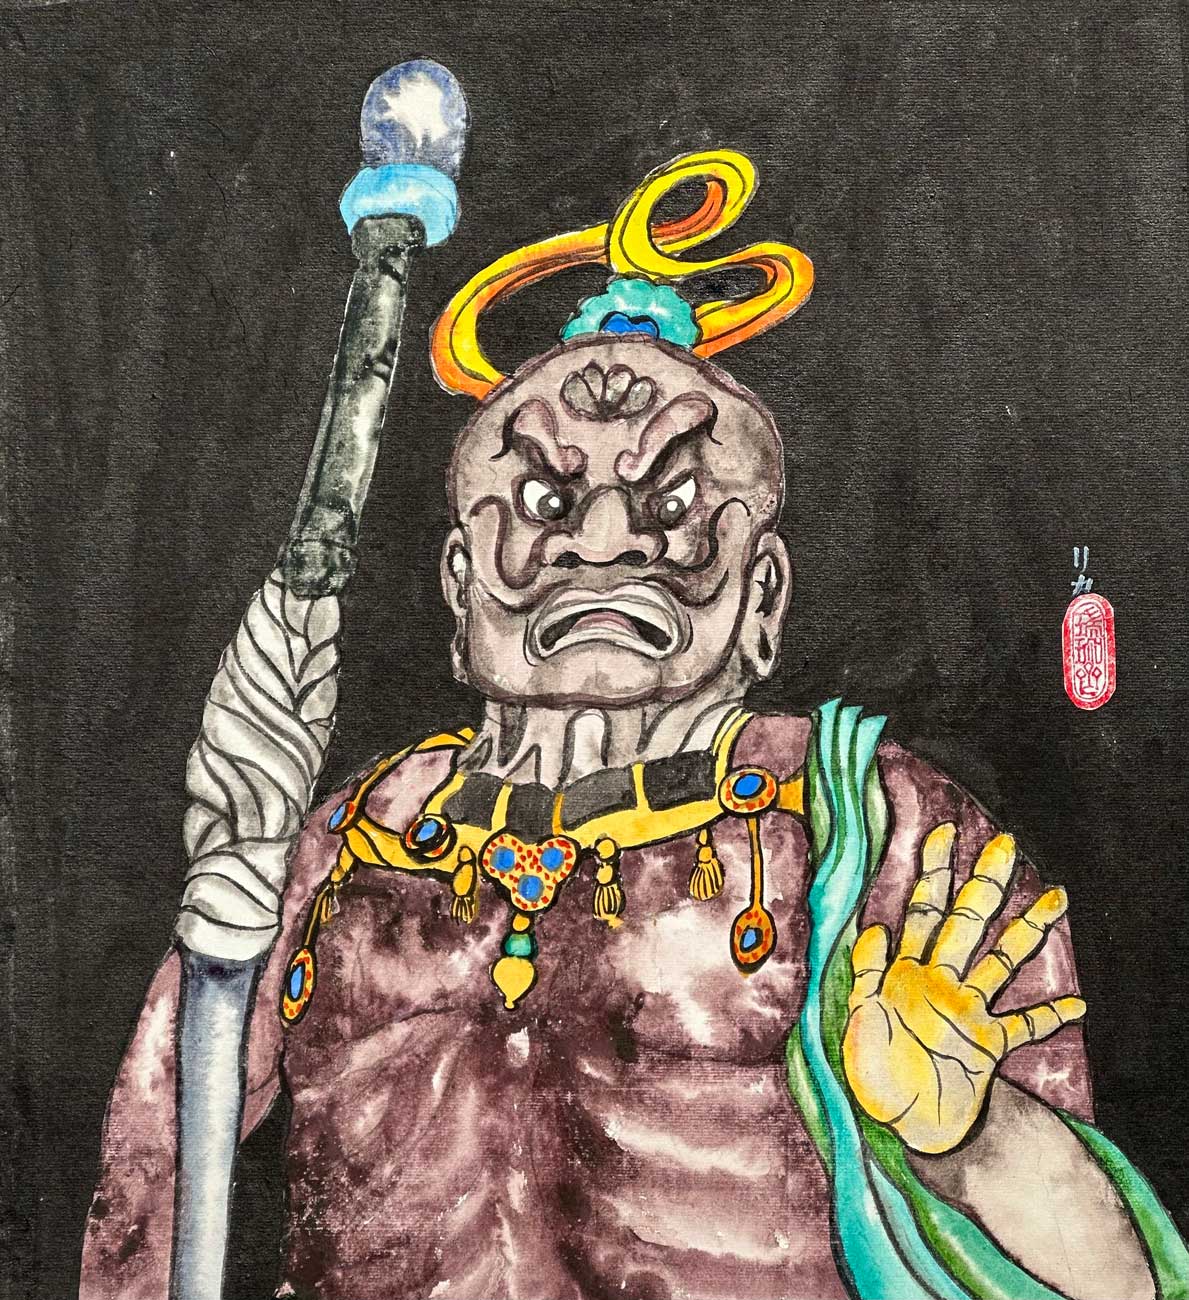 Guardian King painted in tarashi komi by Frederica Marshall.